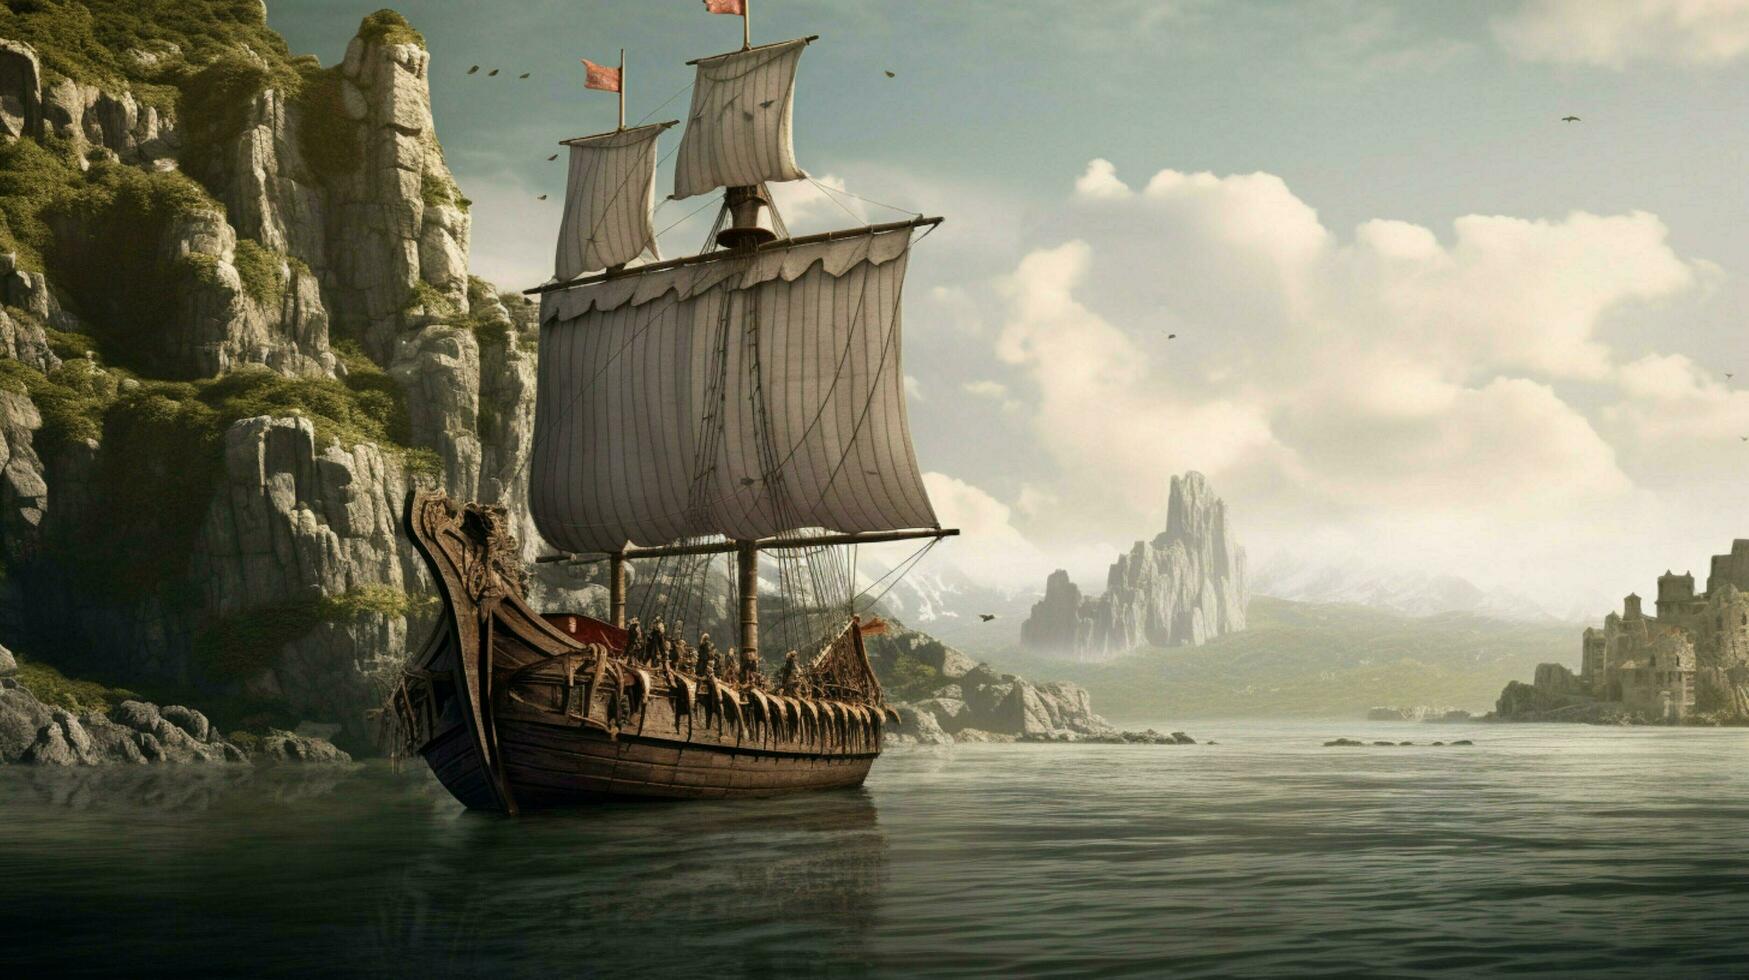 viking ship sailing past ancient castle with drag photo